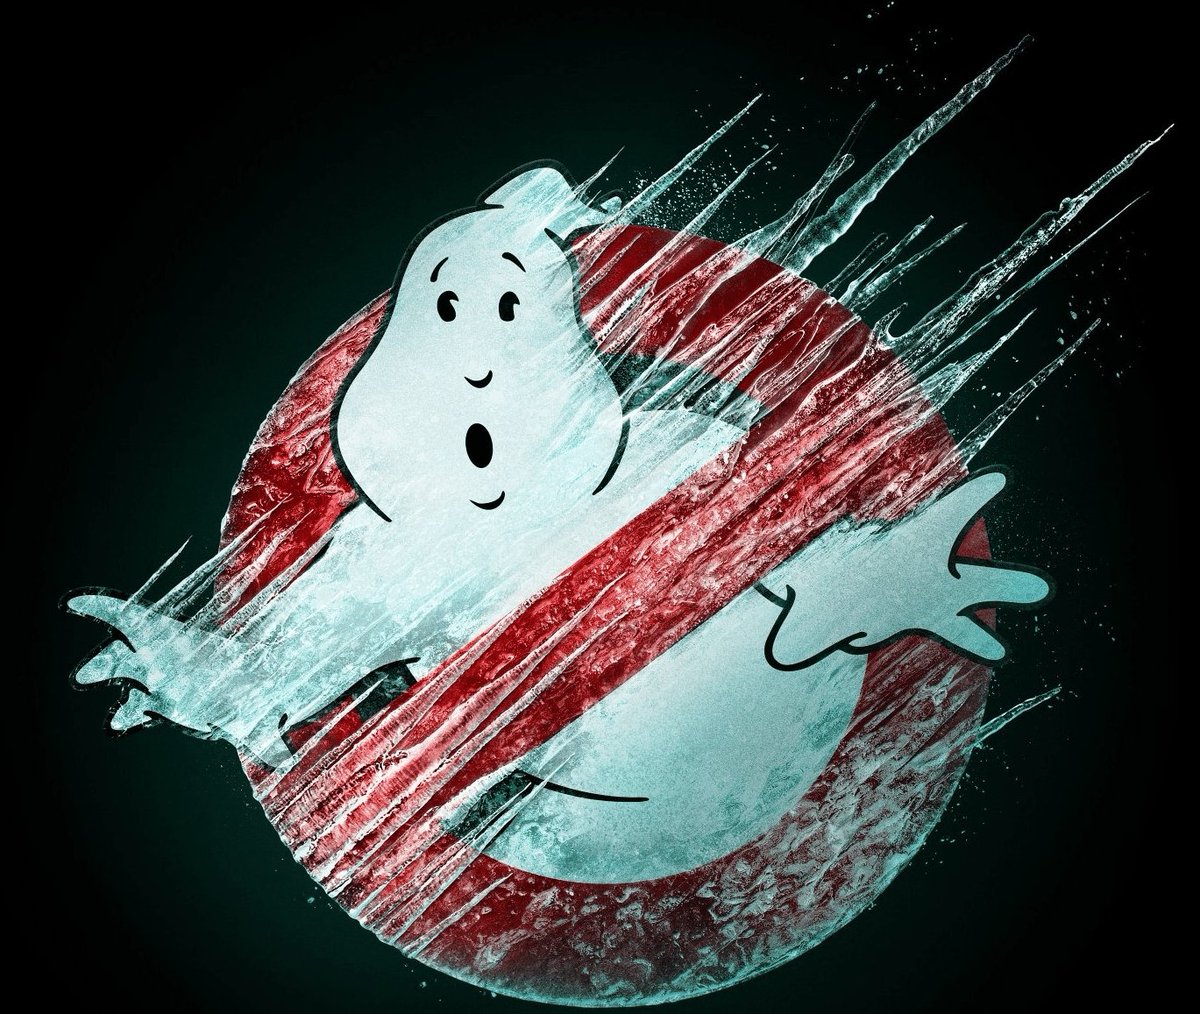 Funny ,spooky and frantic. Premieres tomorrow. @NuMaxCinemas @CinemaxUg @CountryCinemas @nbstv @Ghostbusters